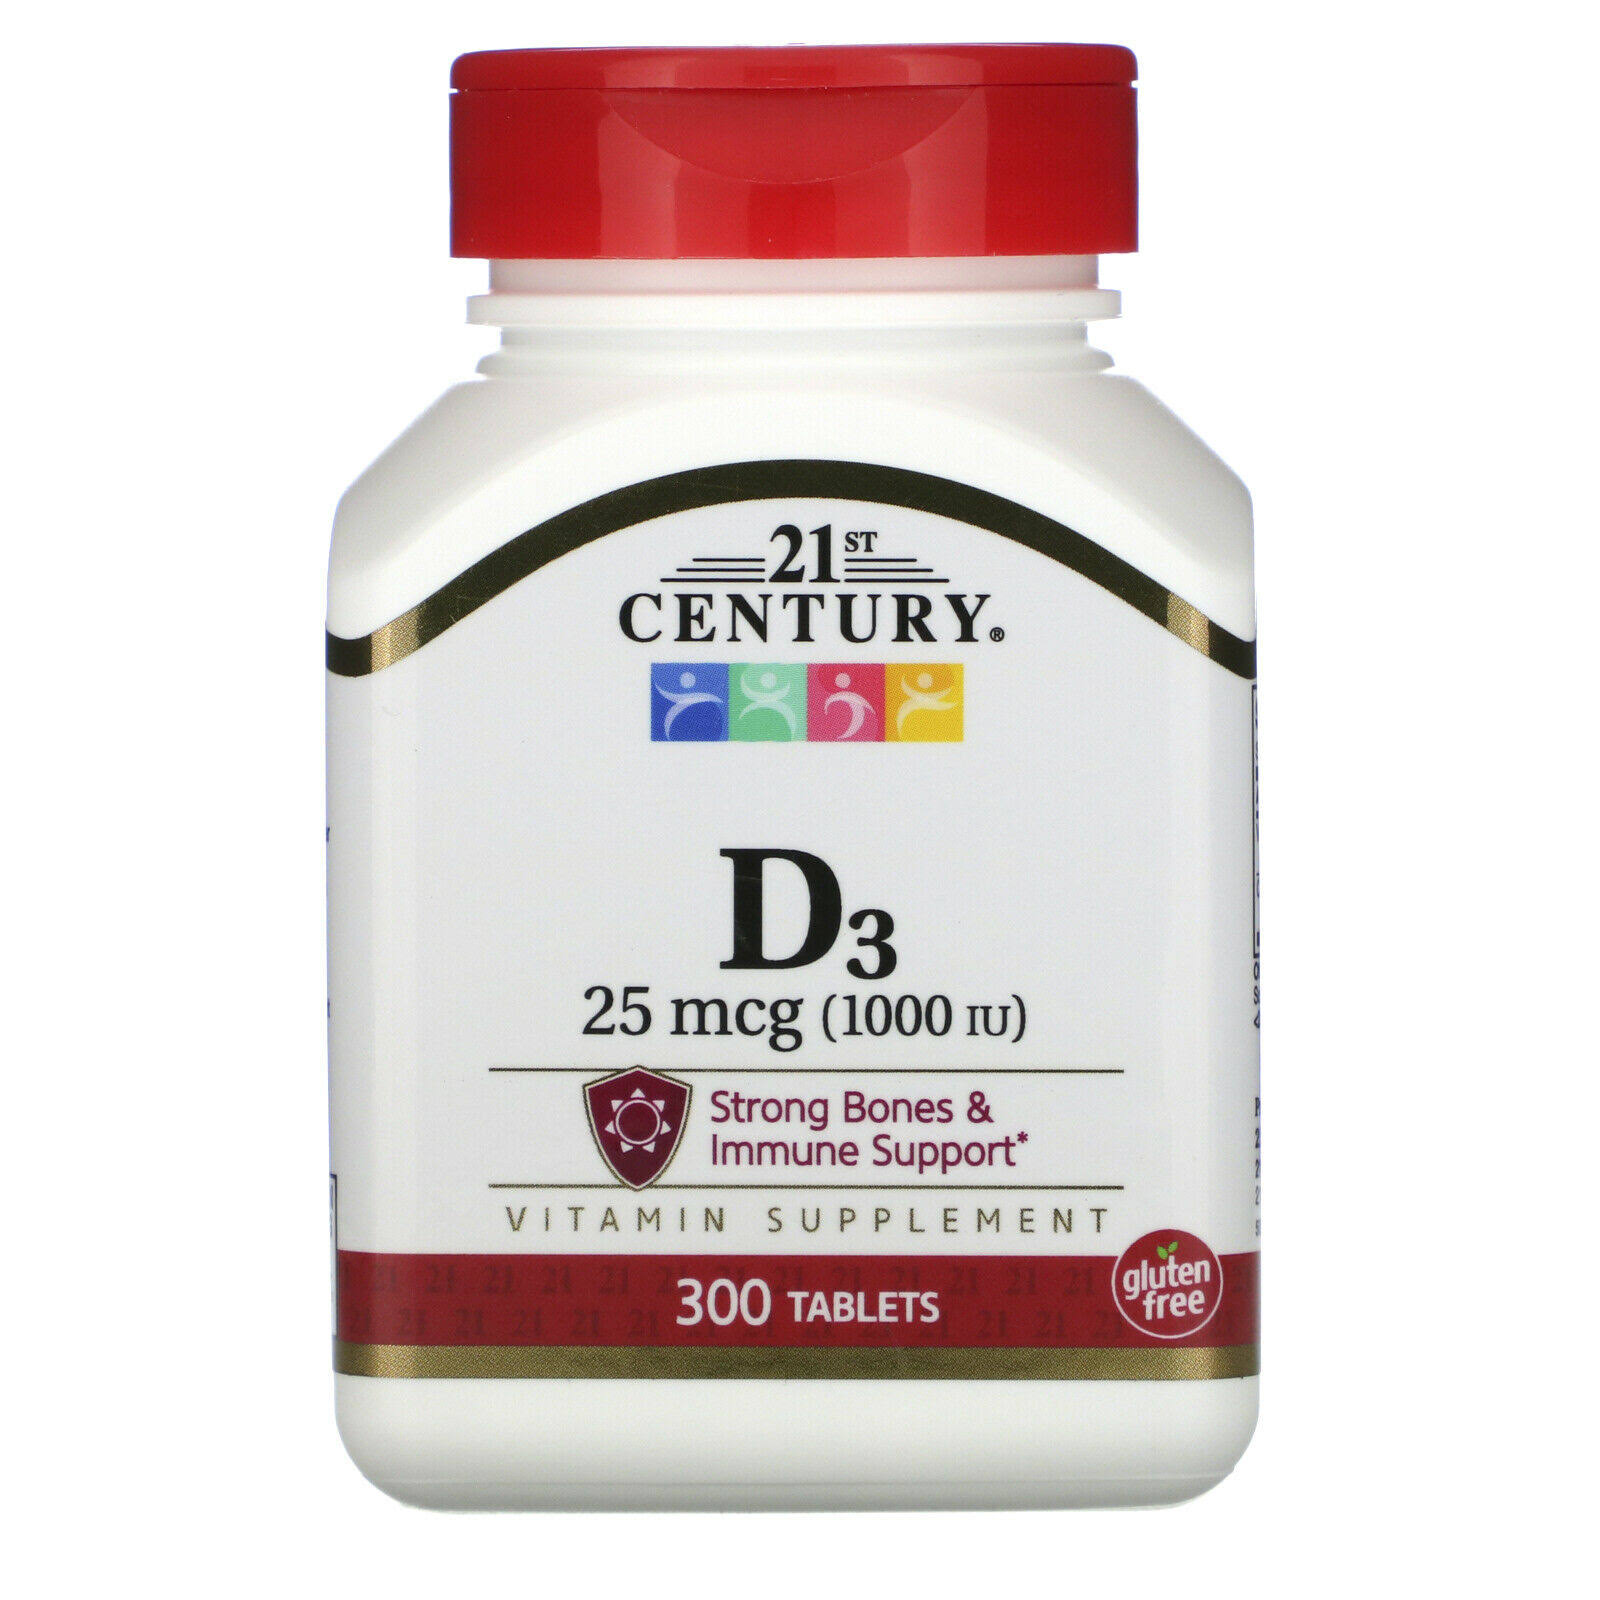 21st Century D-1000 IU Vitamin Supplement - 300 Tablets